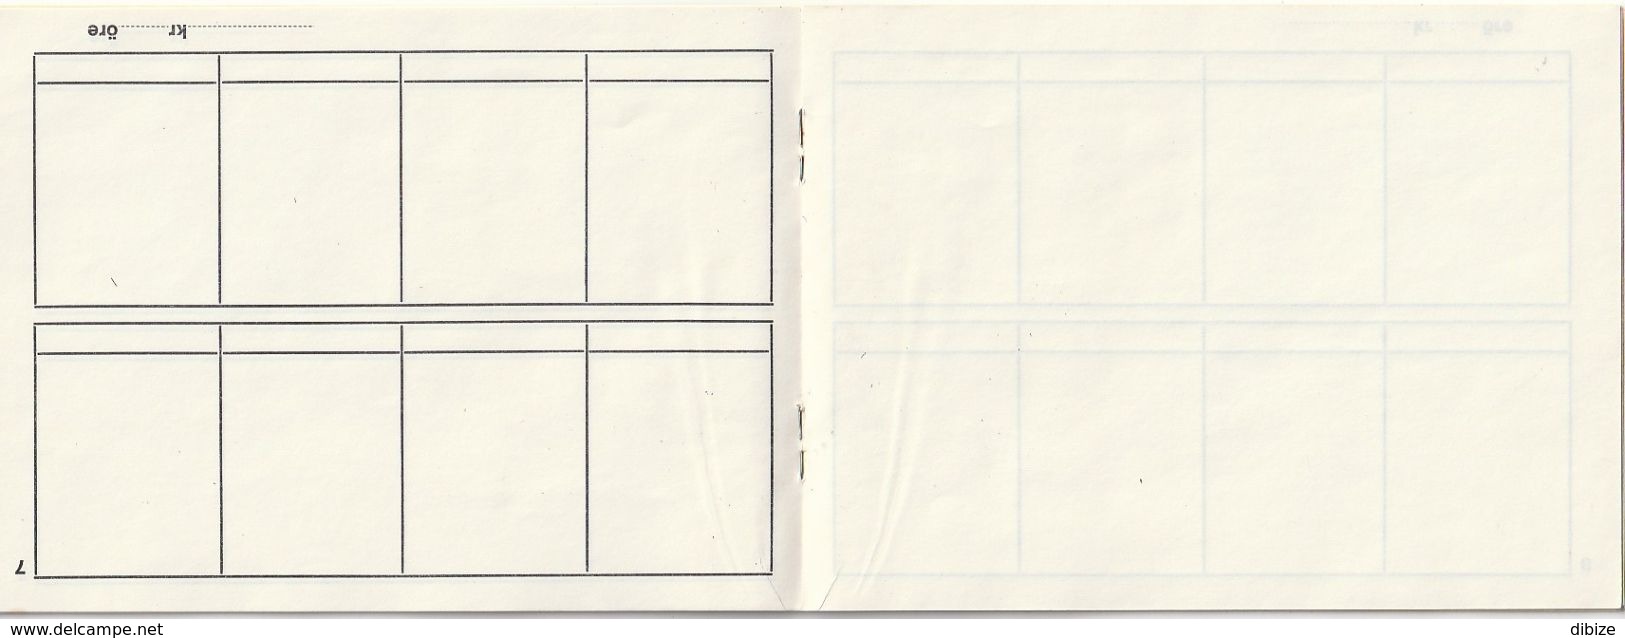 Sweden. Stamp Album. Selection Booklet. 12 Sheets Including 1 Full. - Petit Format, Fond Blanc